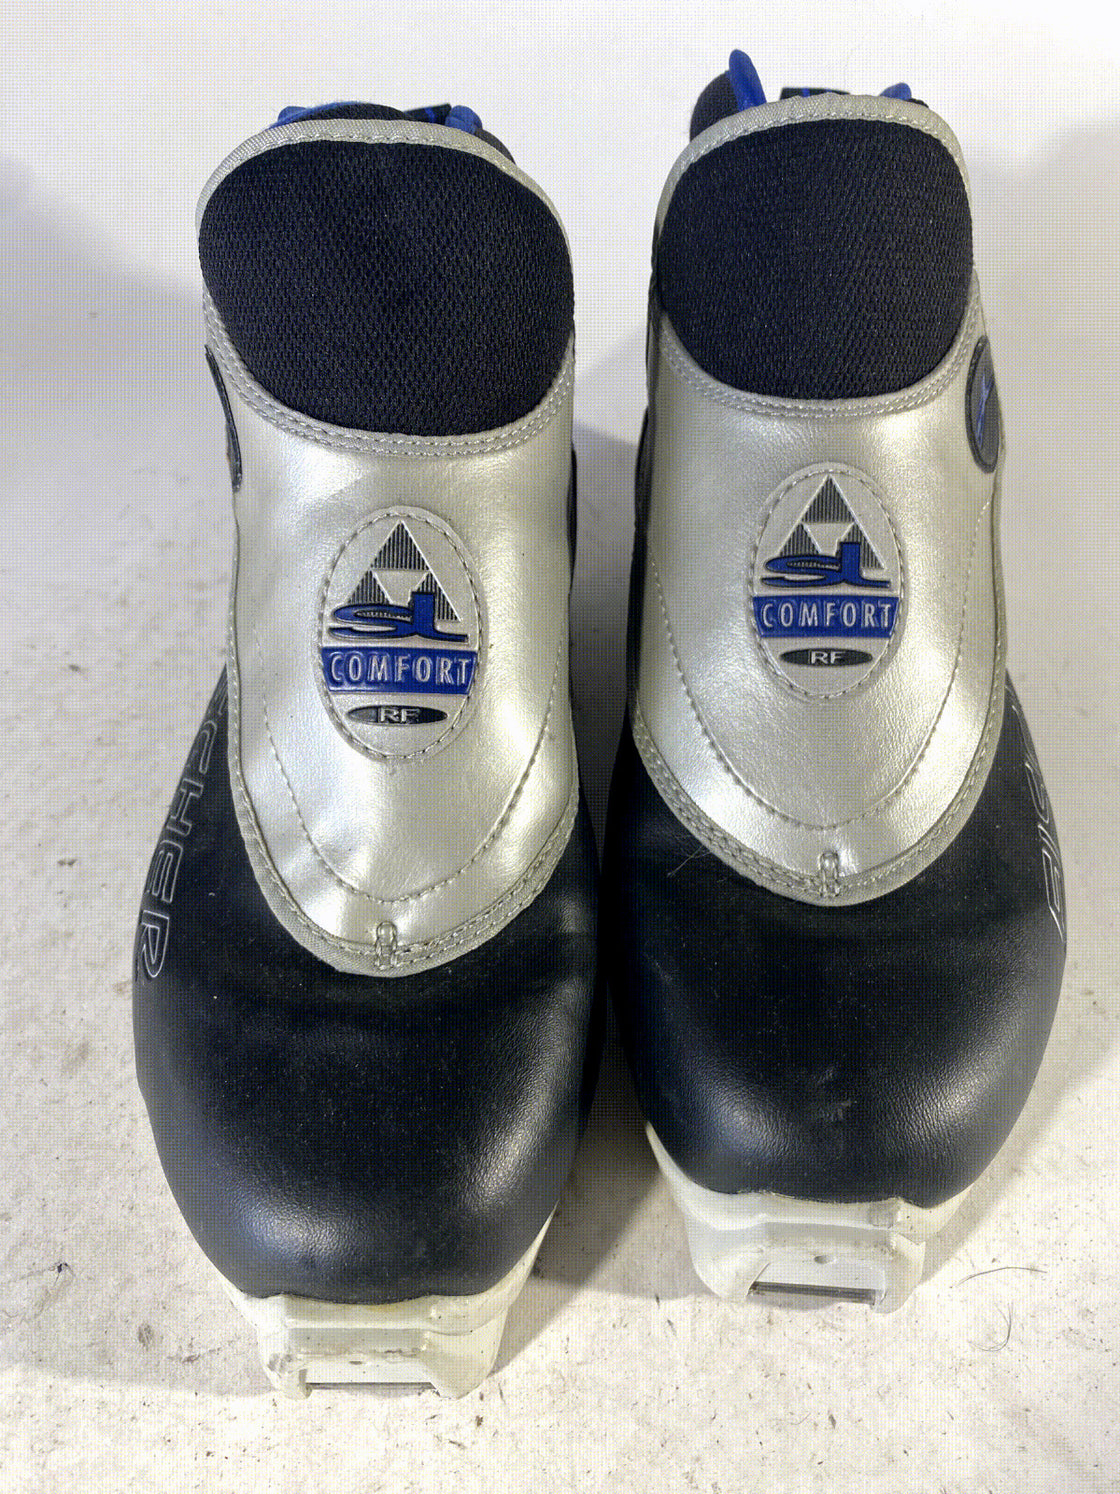 Fischer SL Comfort RF Nordic Cross Country Ski Boots Size EU44 US10.5 SNS Profil